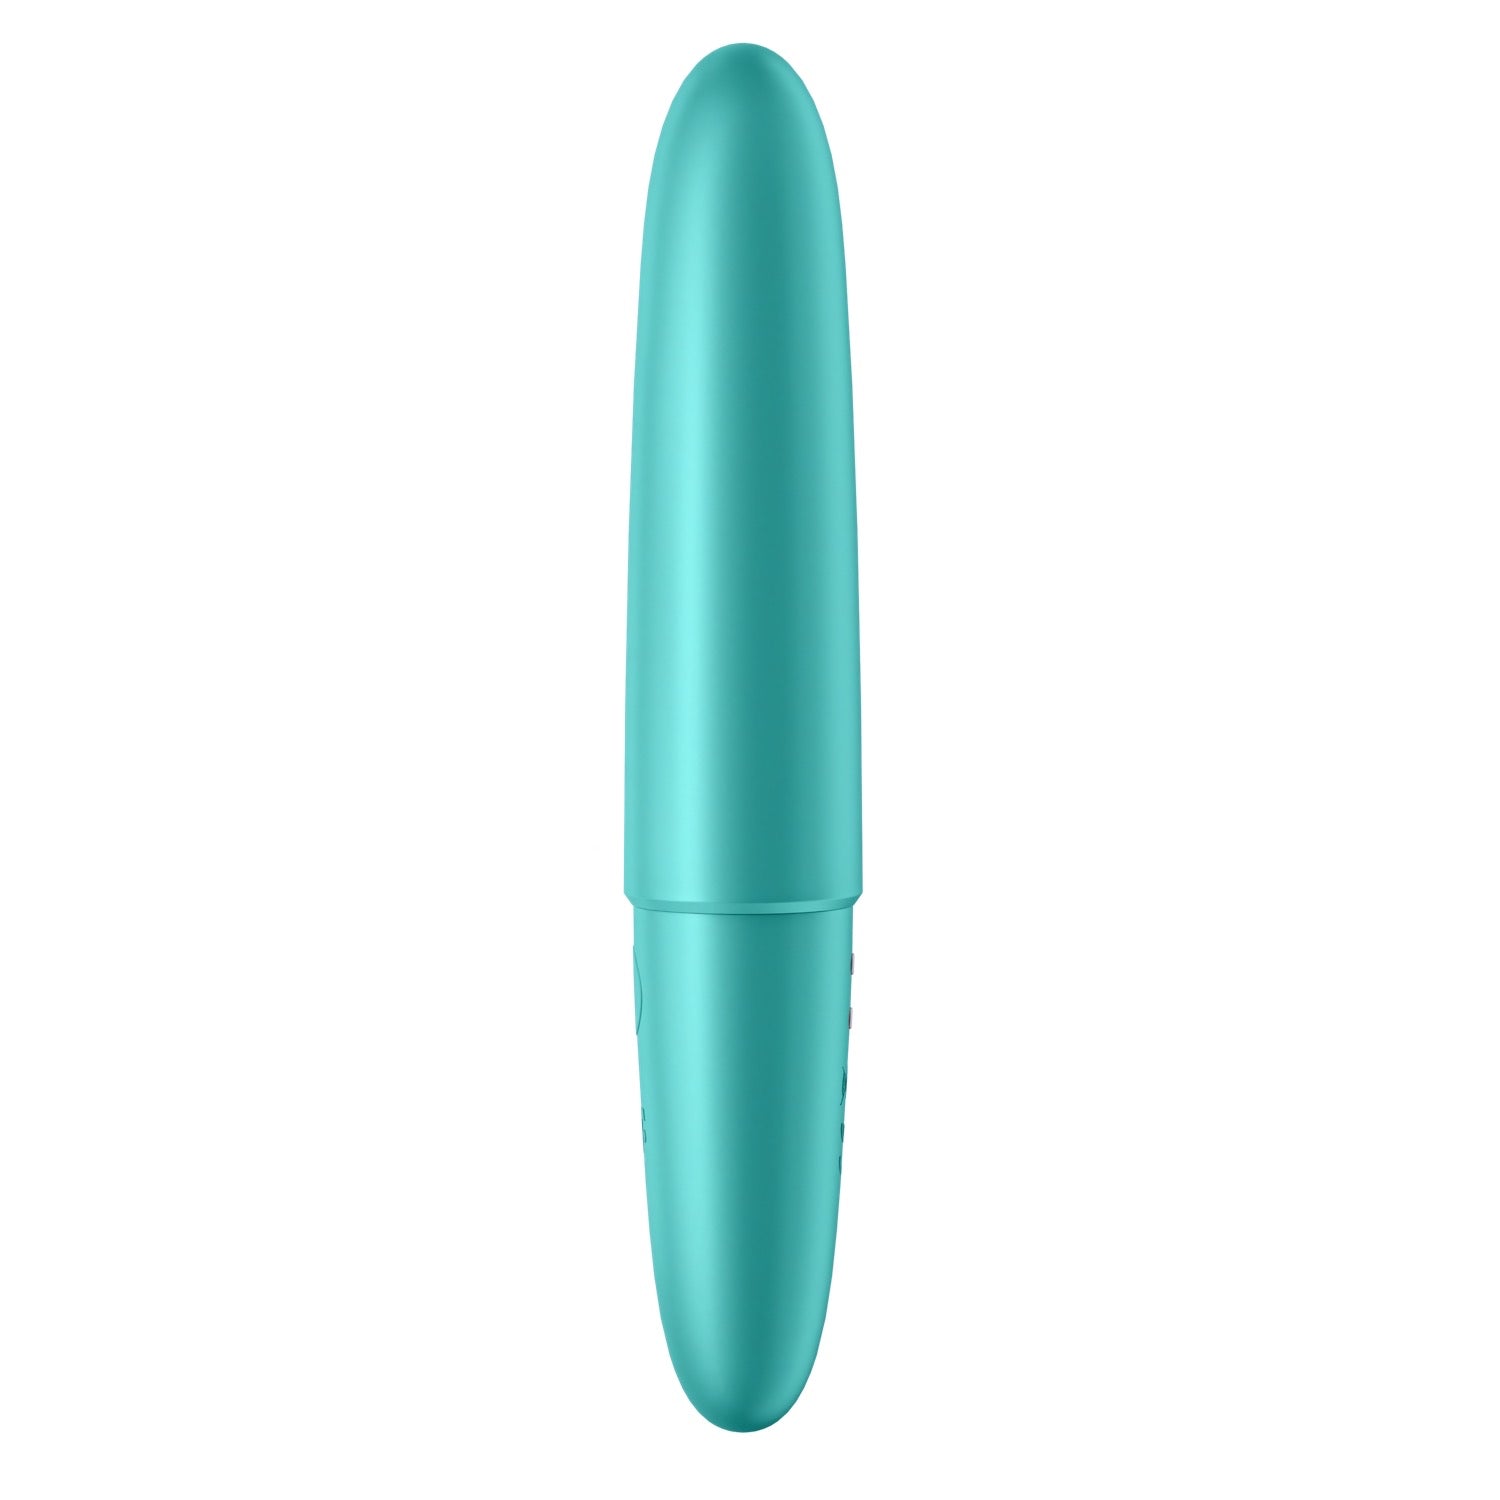 Satisfyer Ultra Power Bullet 6 - Turquoise by Satisfyer